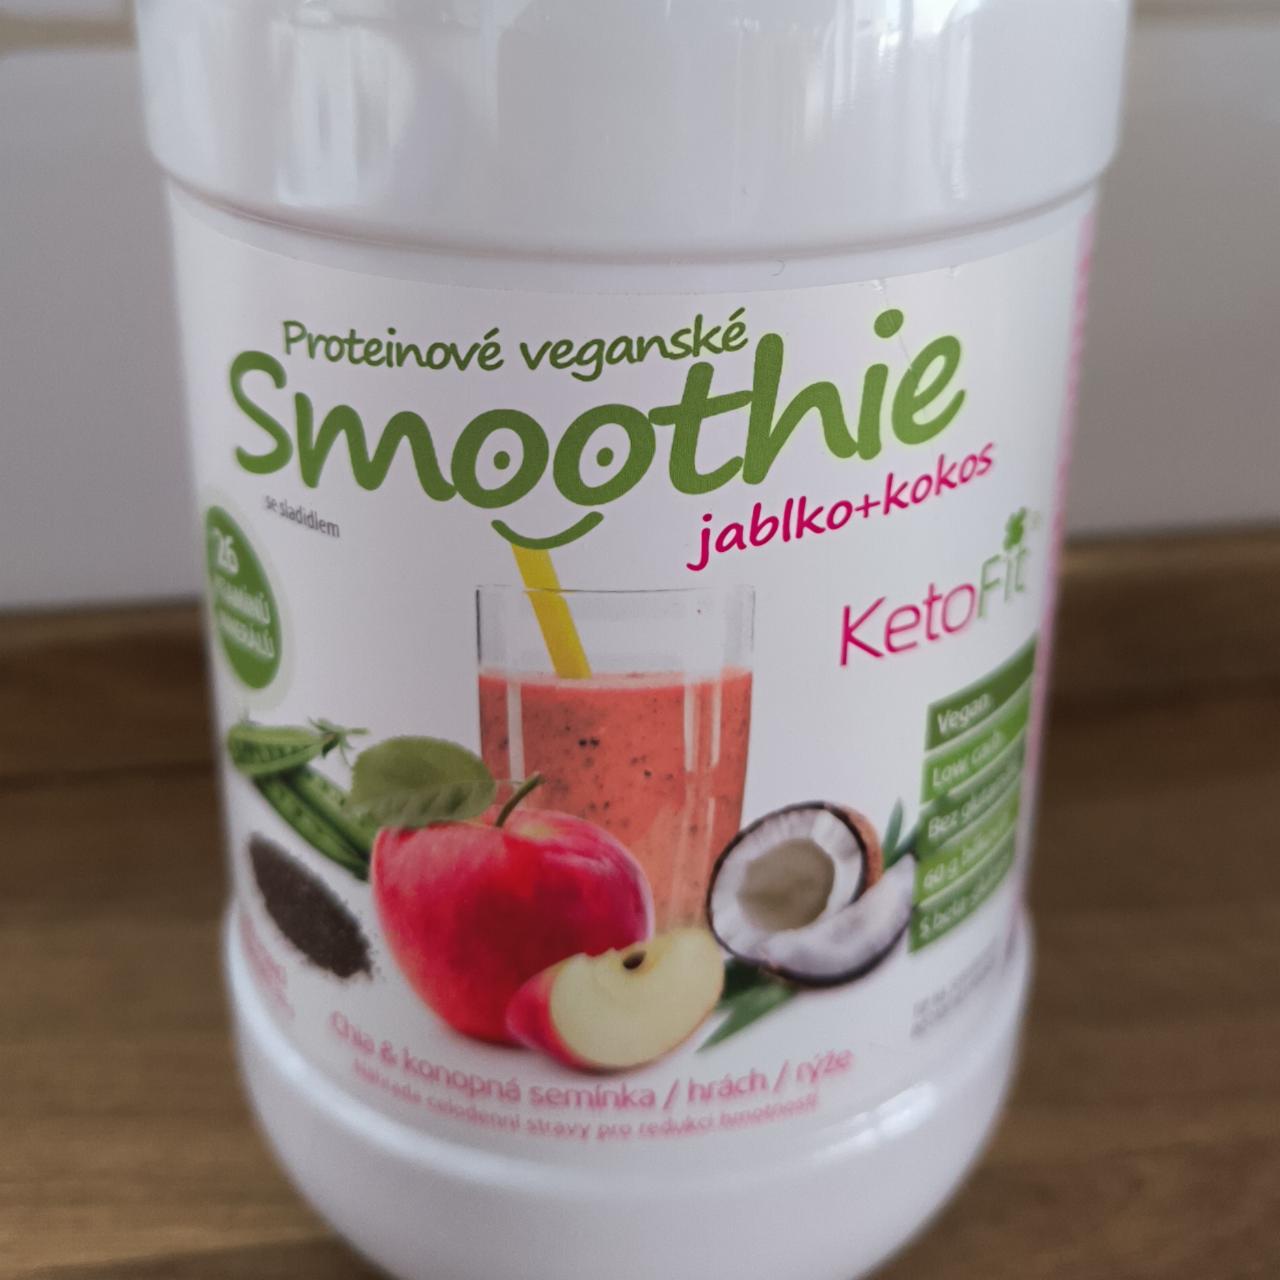 Fotografie - Proteinové veganské smoothie jablko+kokos KetoFit